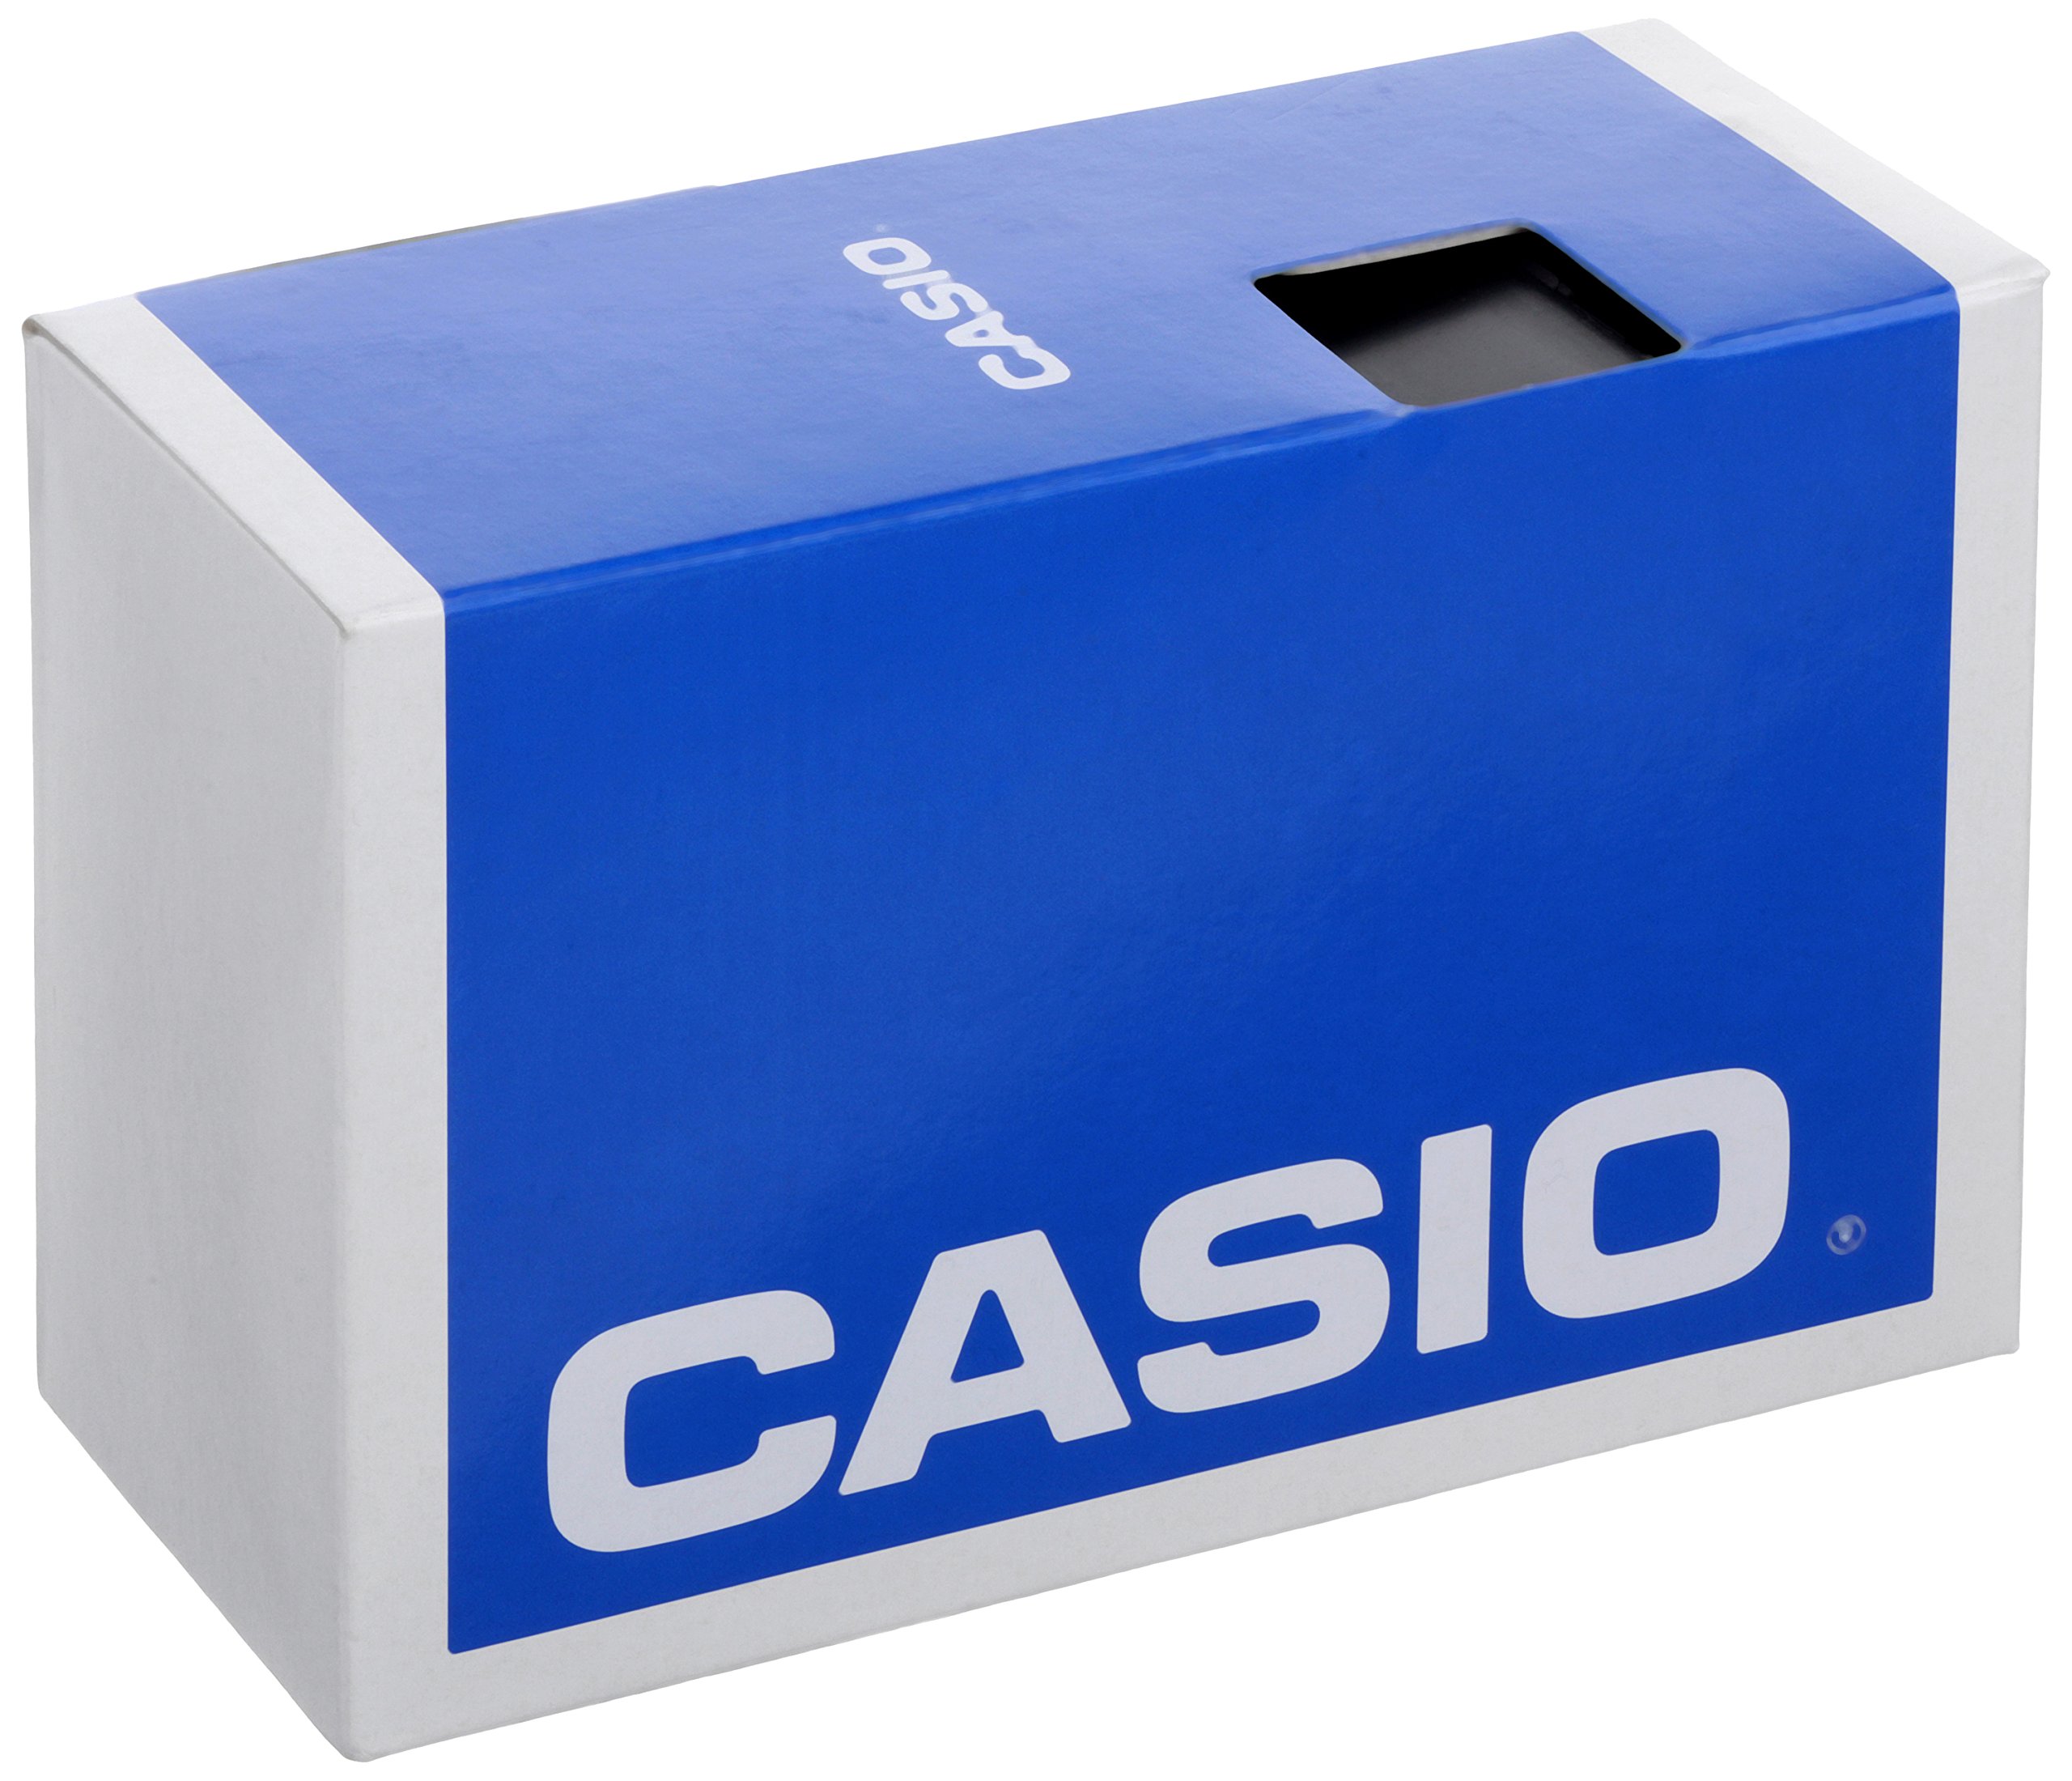 Casio Men's AW81D-2AV Ana-Digi Stainless Steel Watch